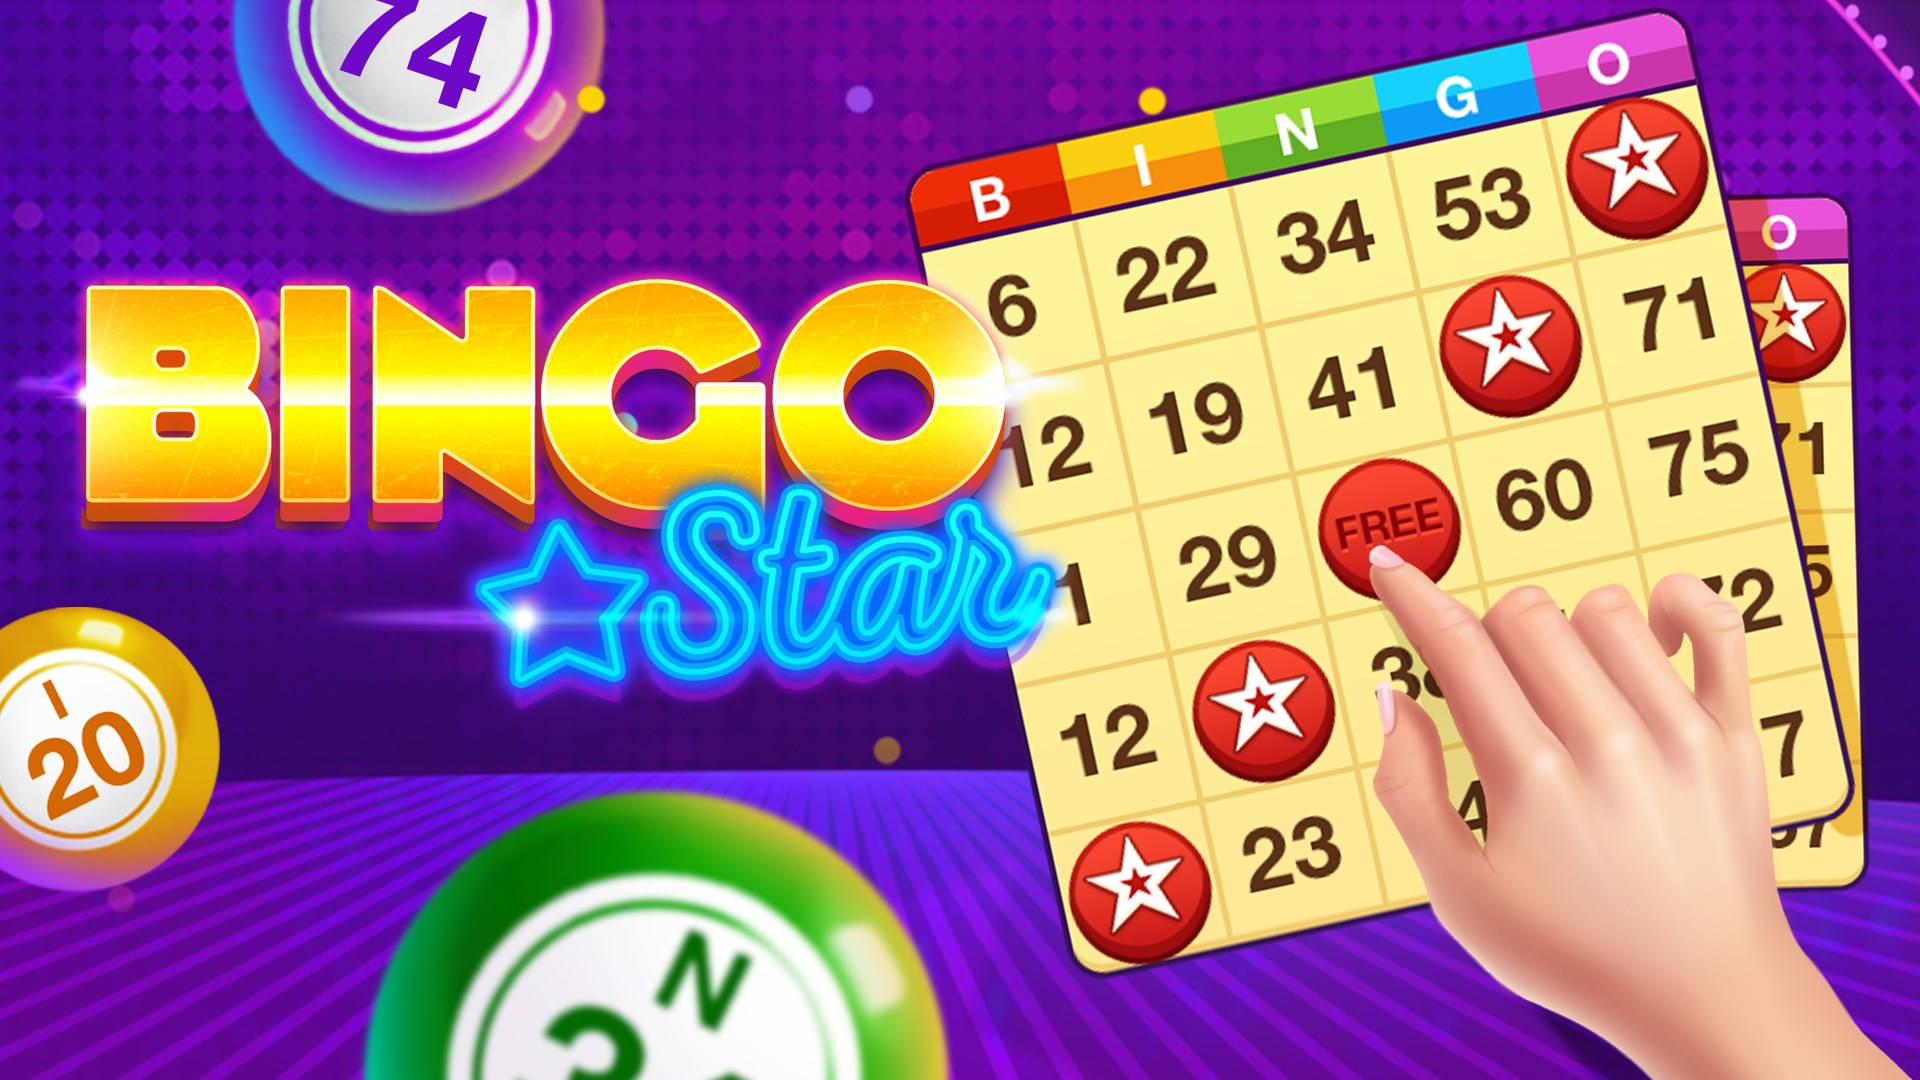 Bingo Star Game Poster Wallpaper